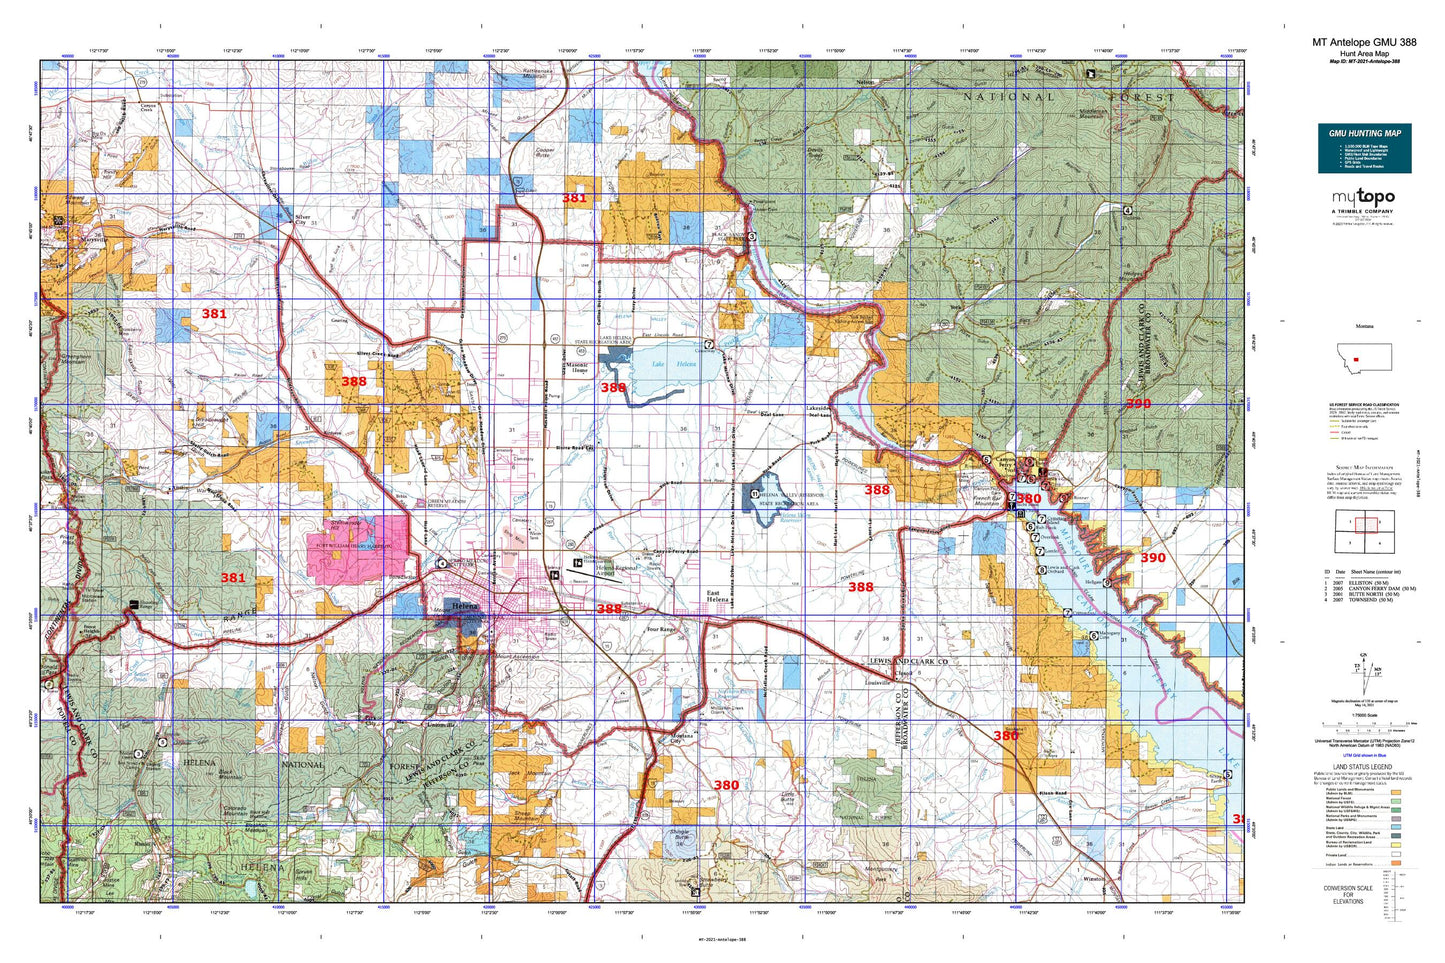 Montana Antelope GMU 388 Map Image